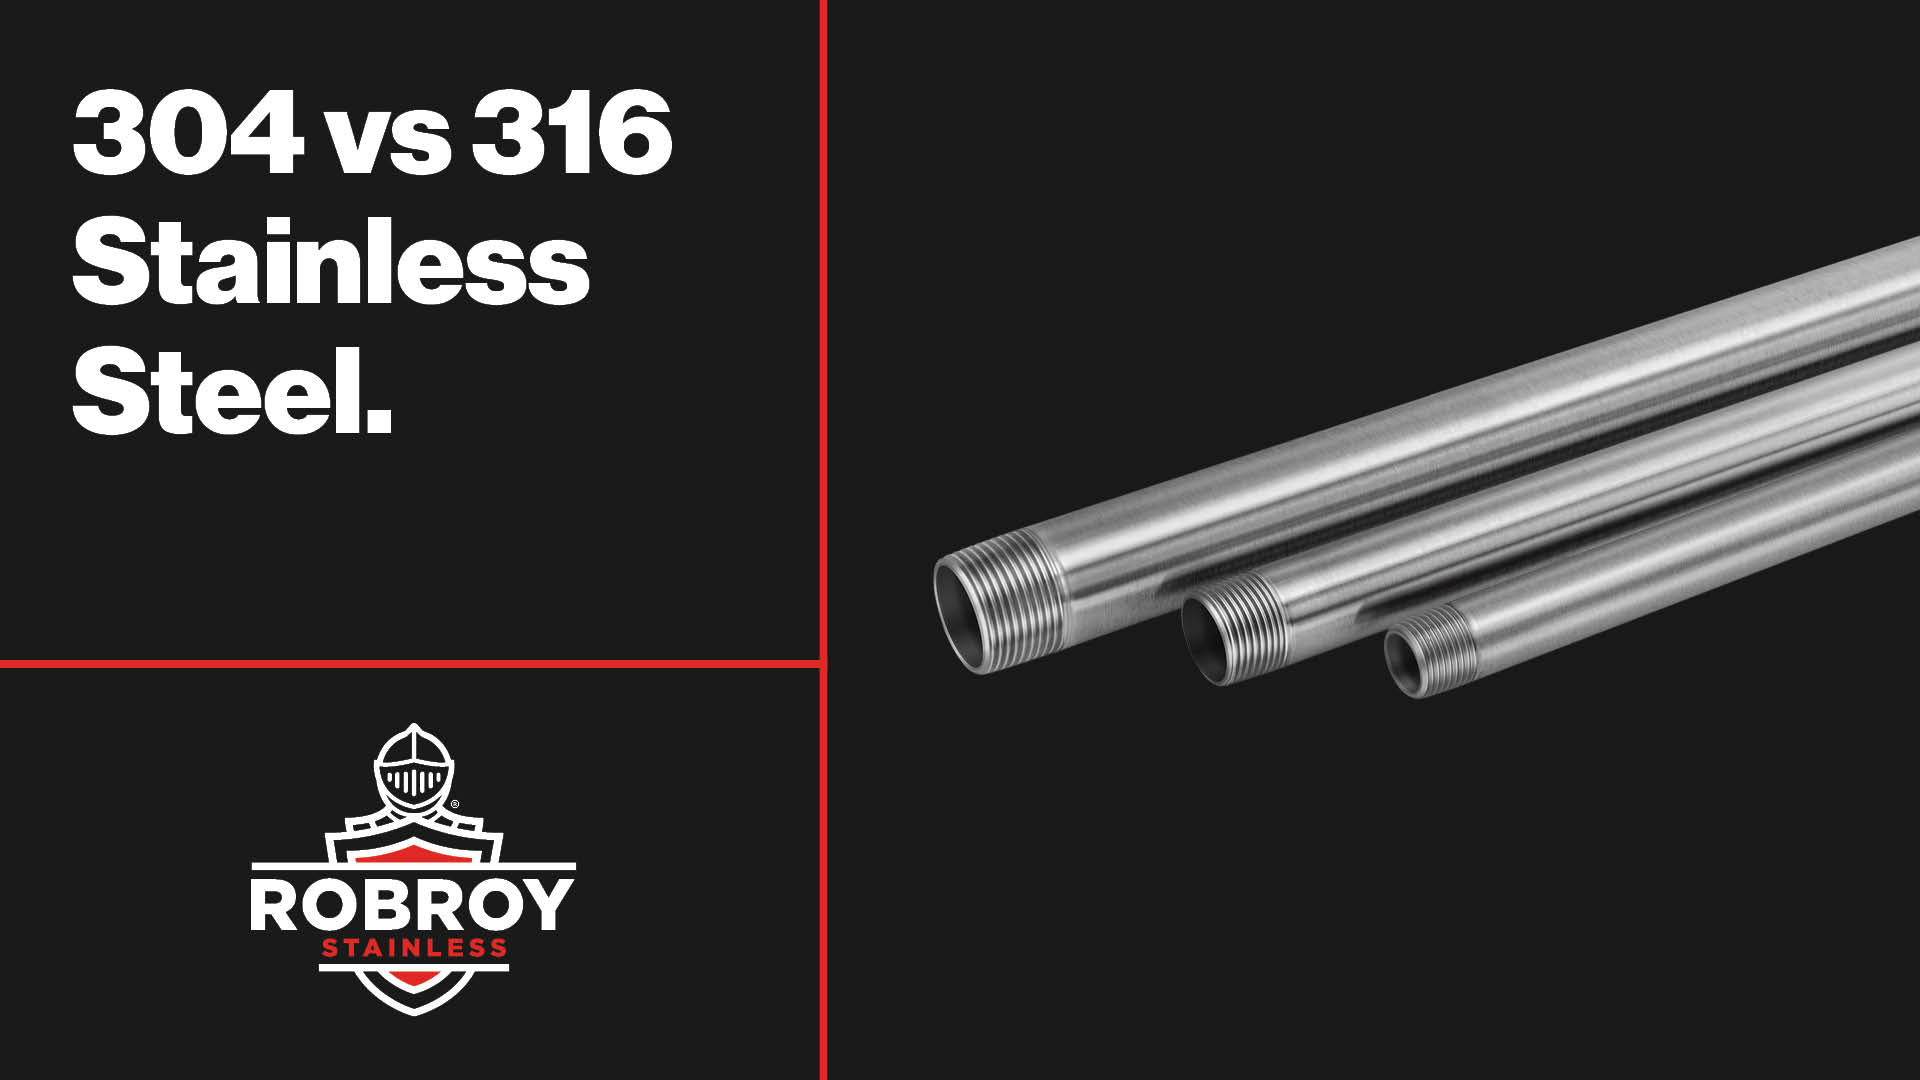 304 vs 316 Stainless Steel